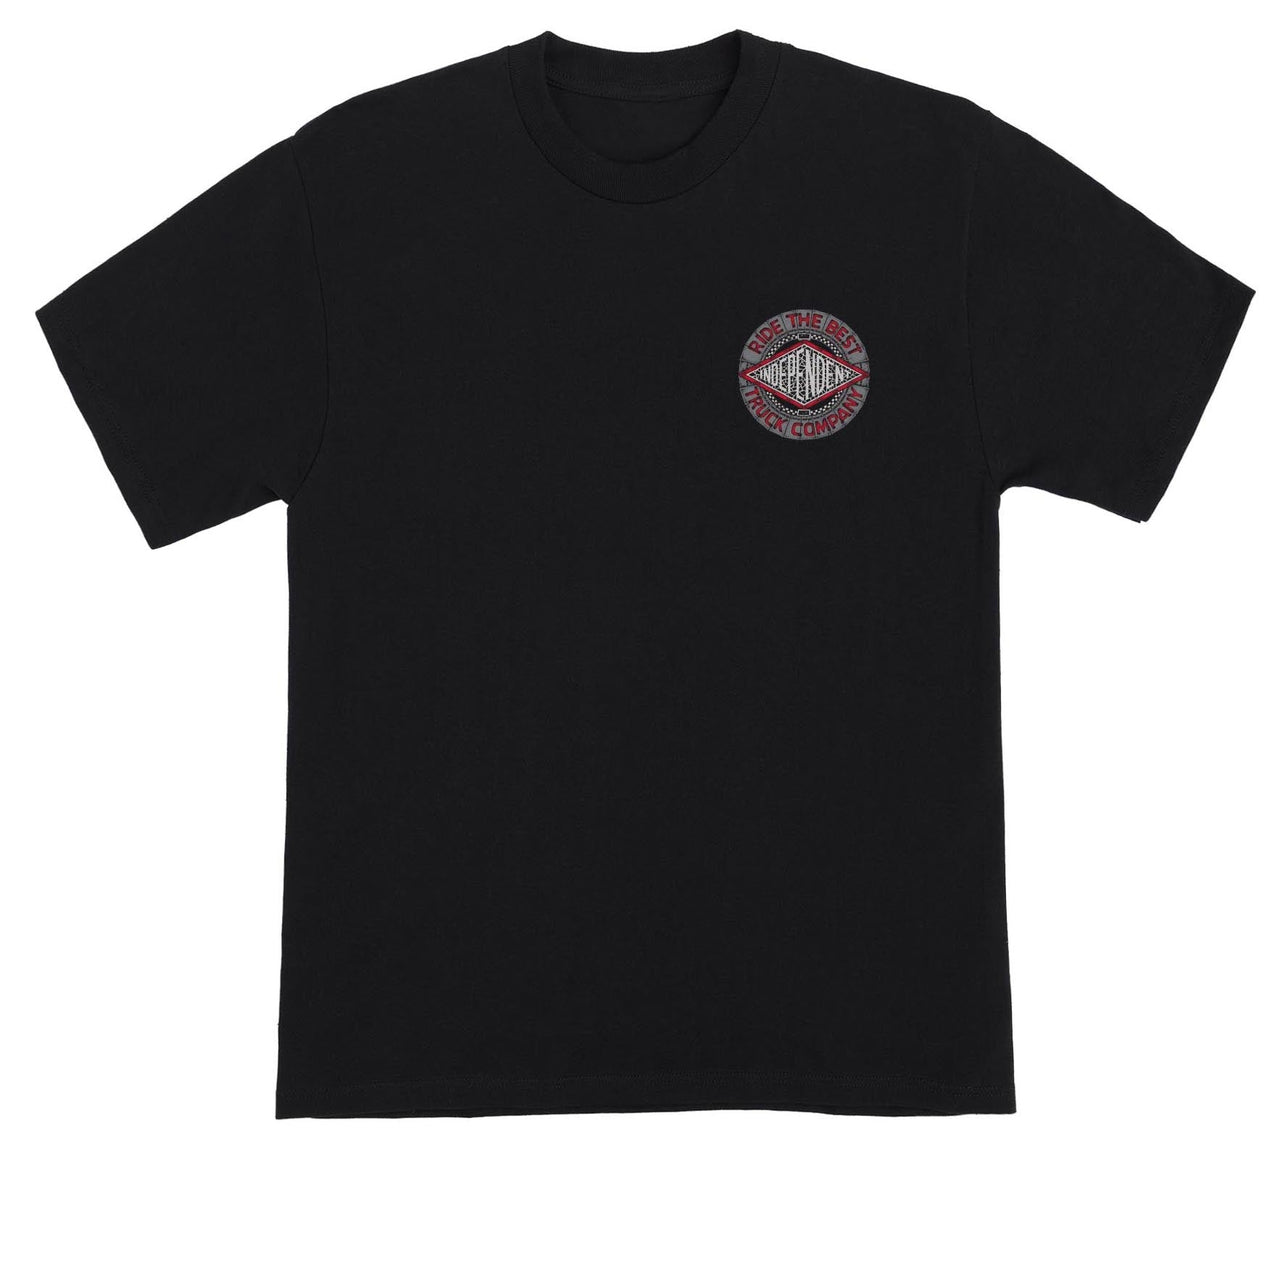 Independent Mako Tile Summit T-Shirt - Black image 2